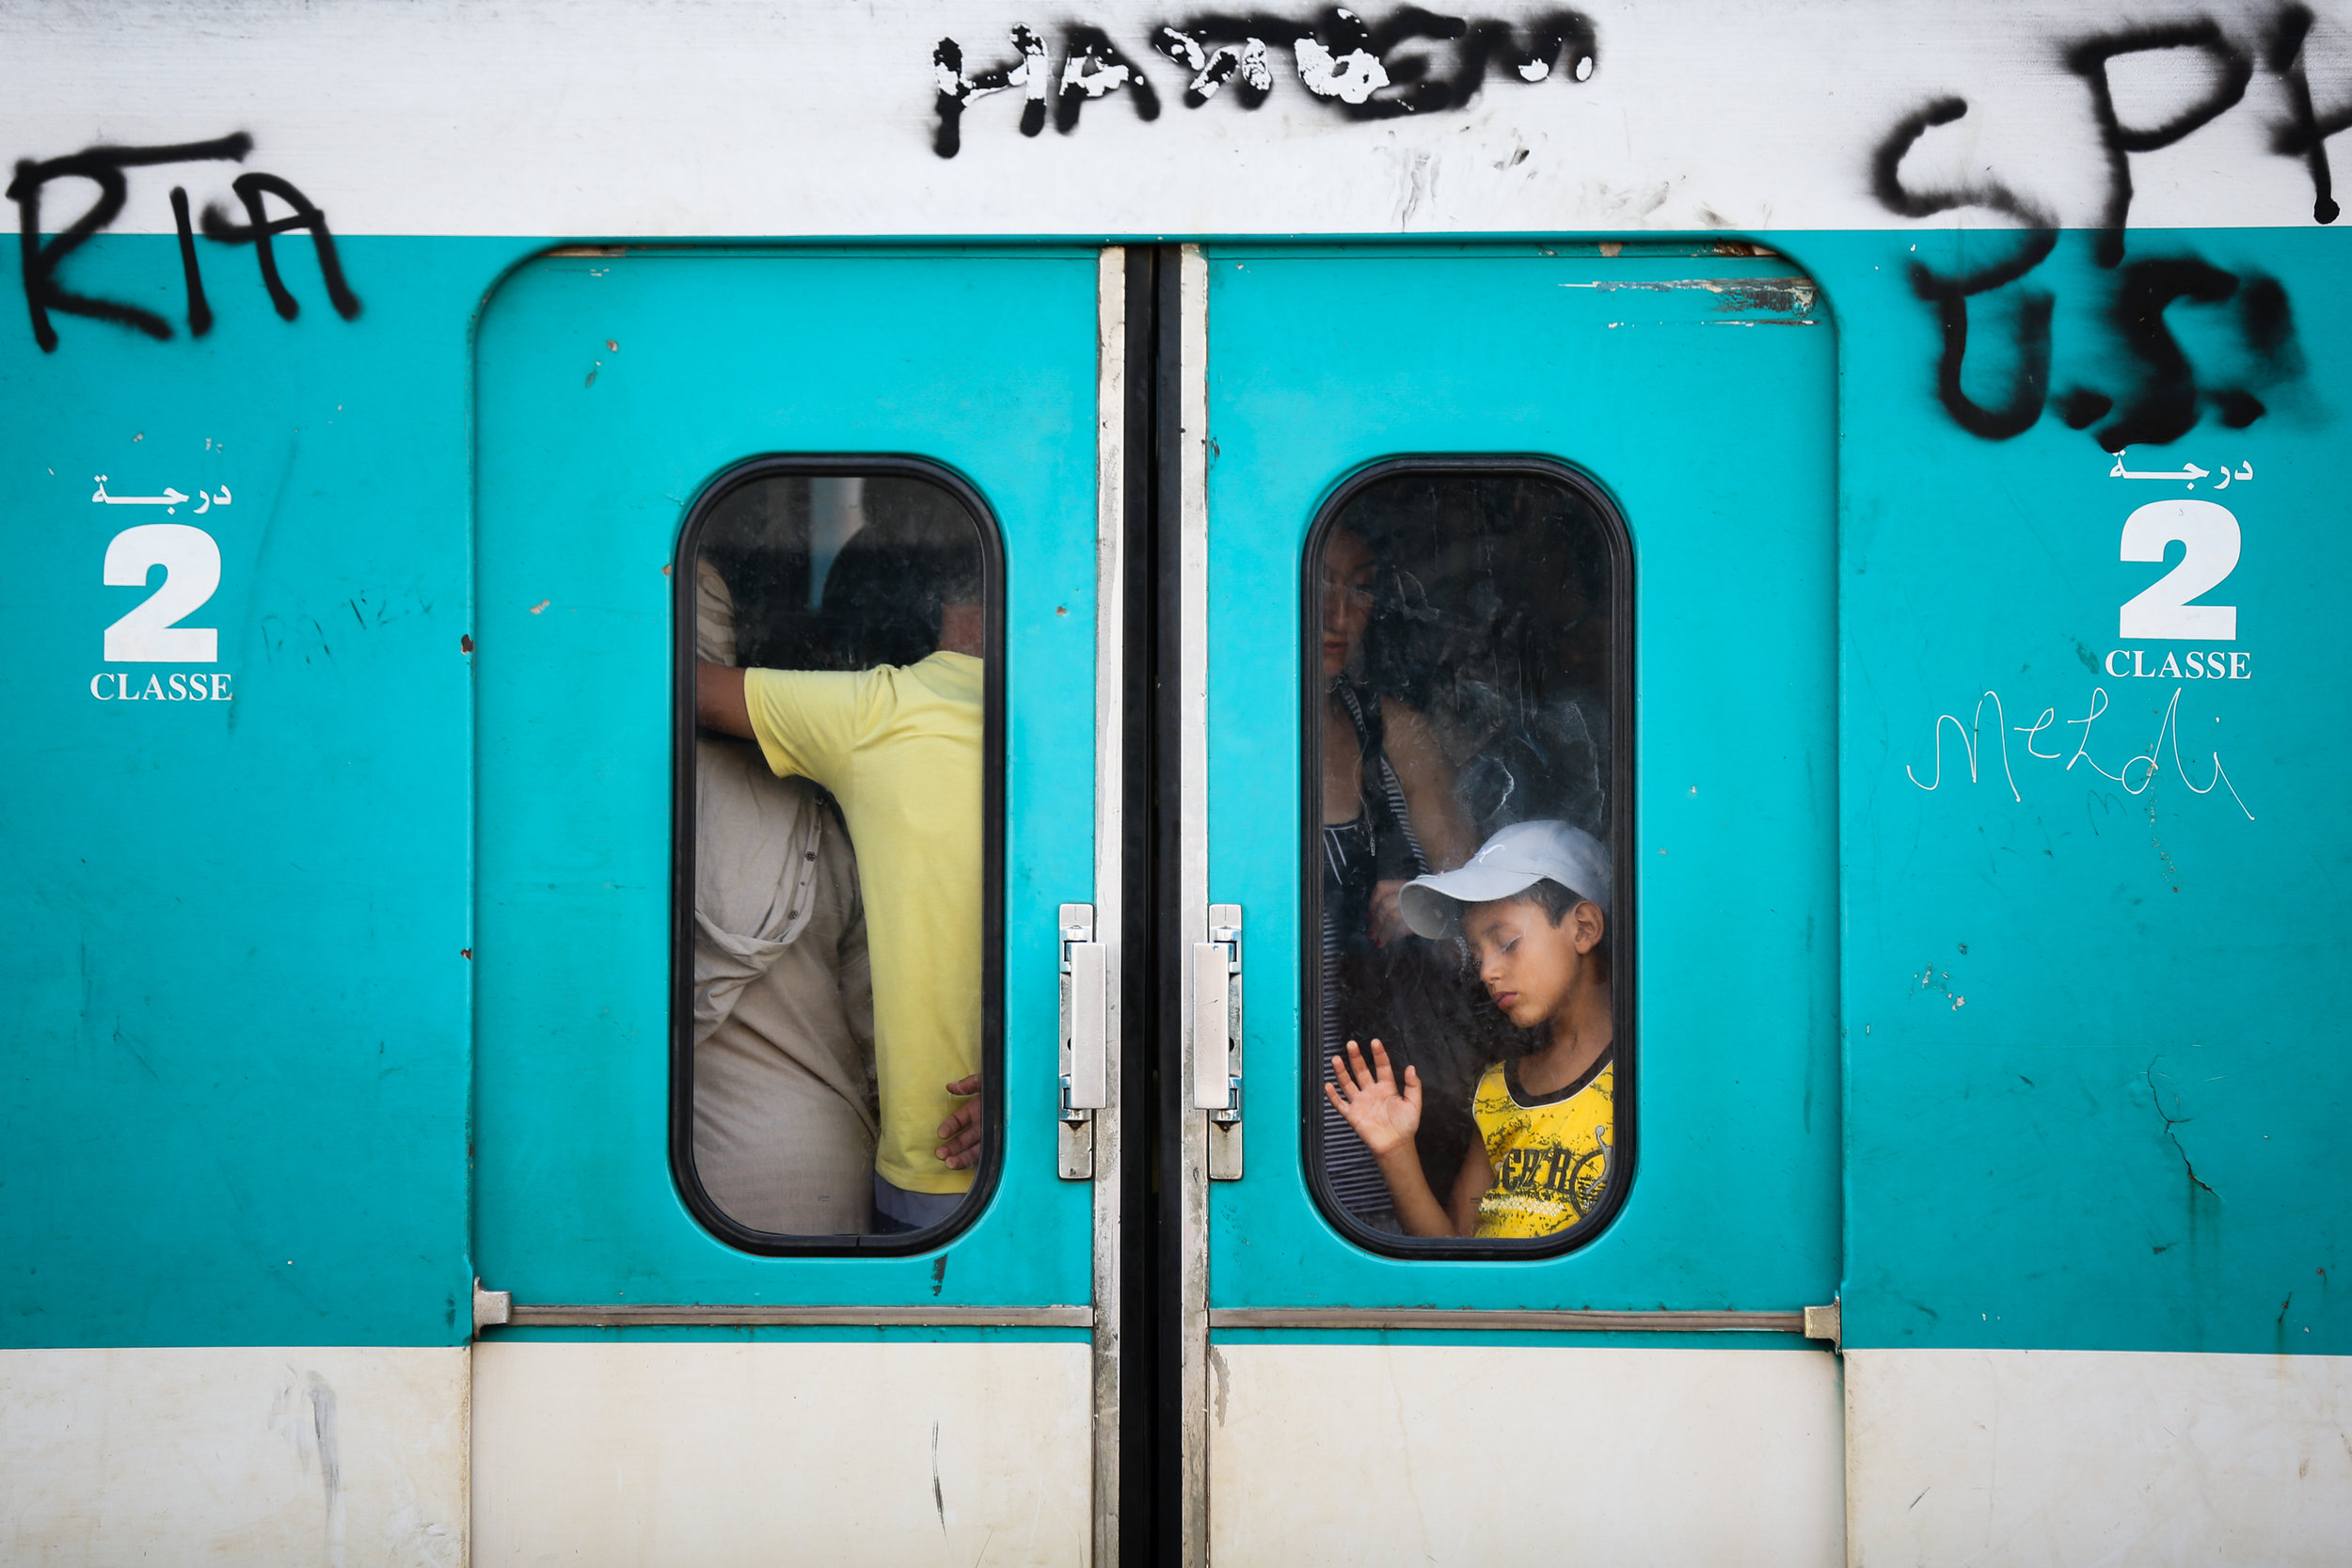  A boy is seen through the doors of a commuter rail train car in Tunis, Tunisia 